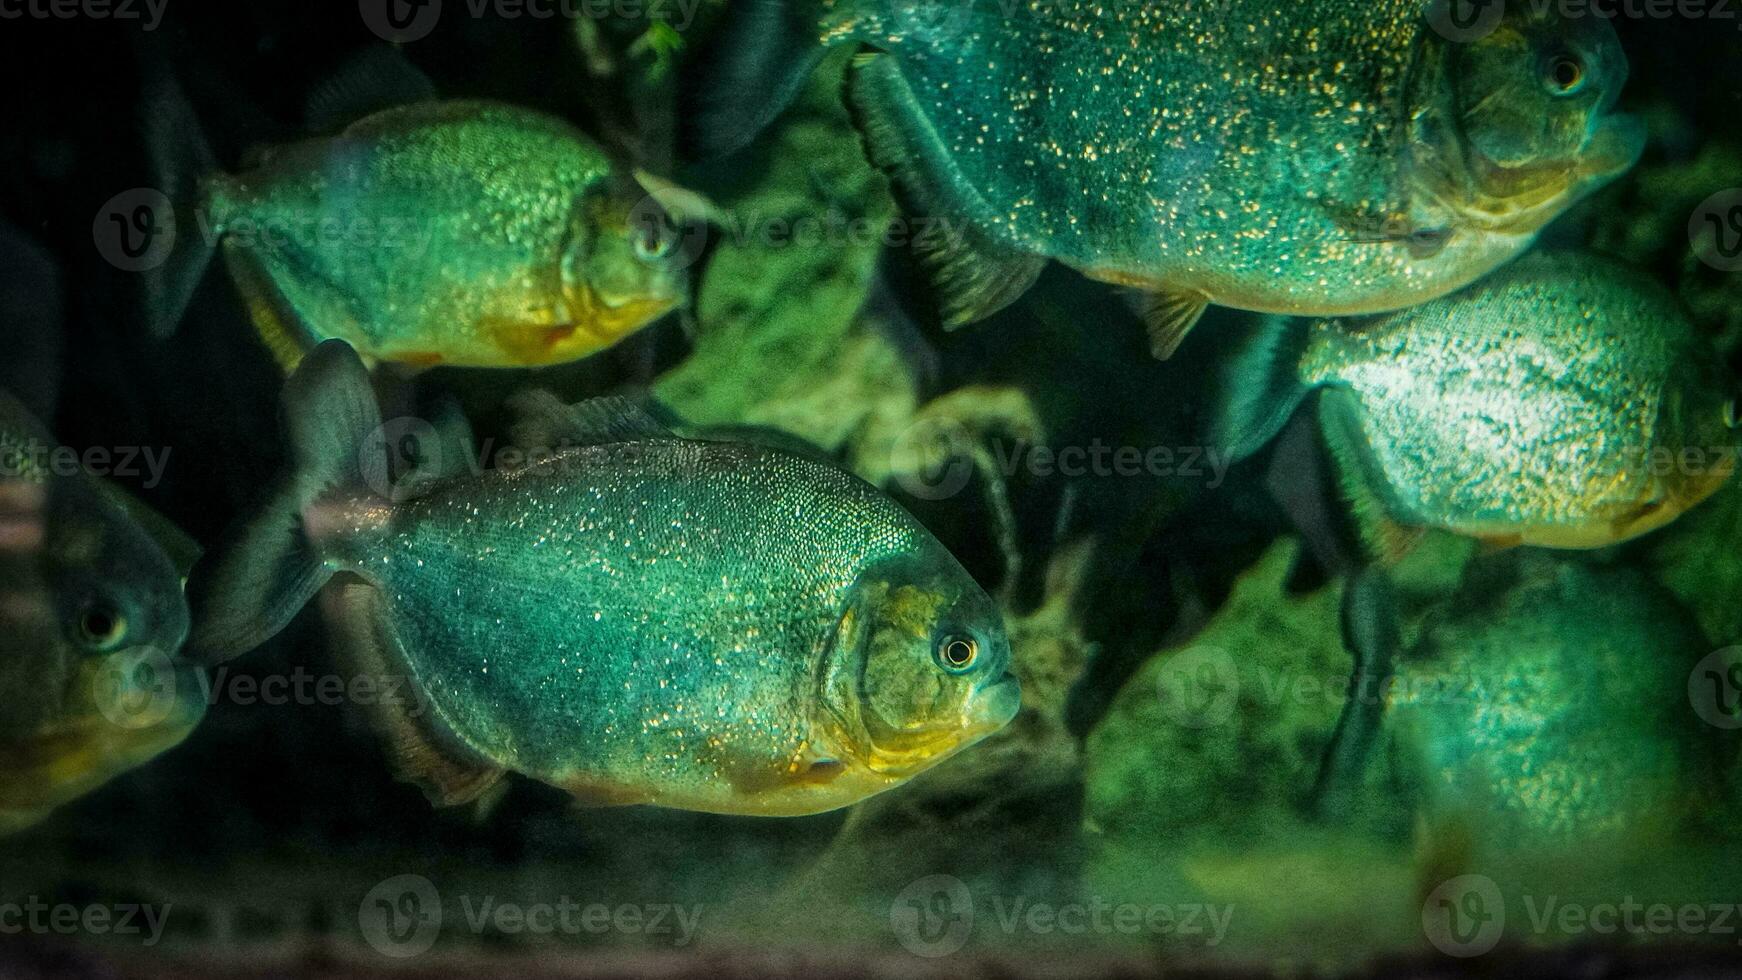 A School of Fierce Piranhas in a Captivating Aquarium Display photo